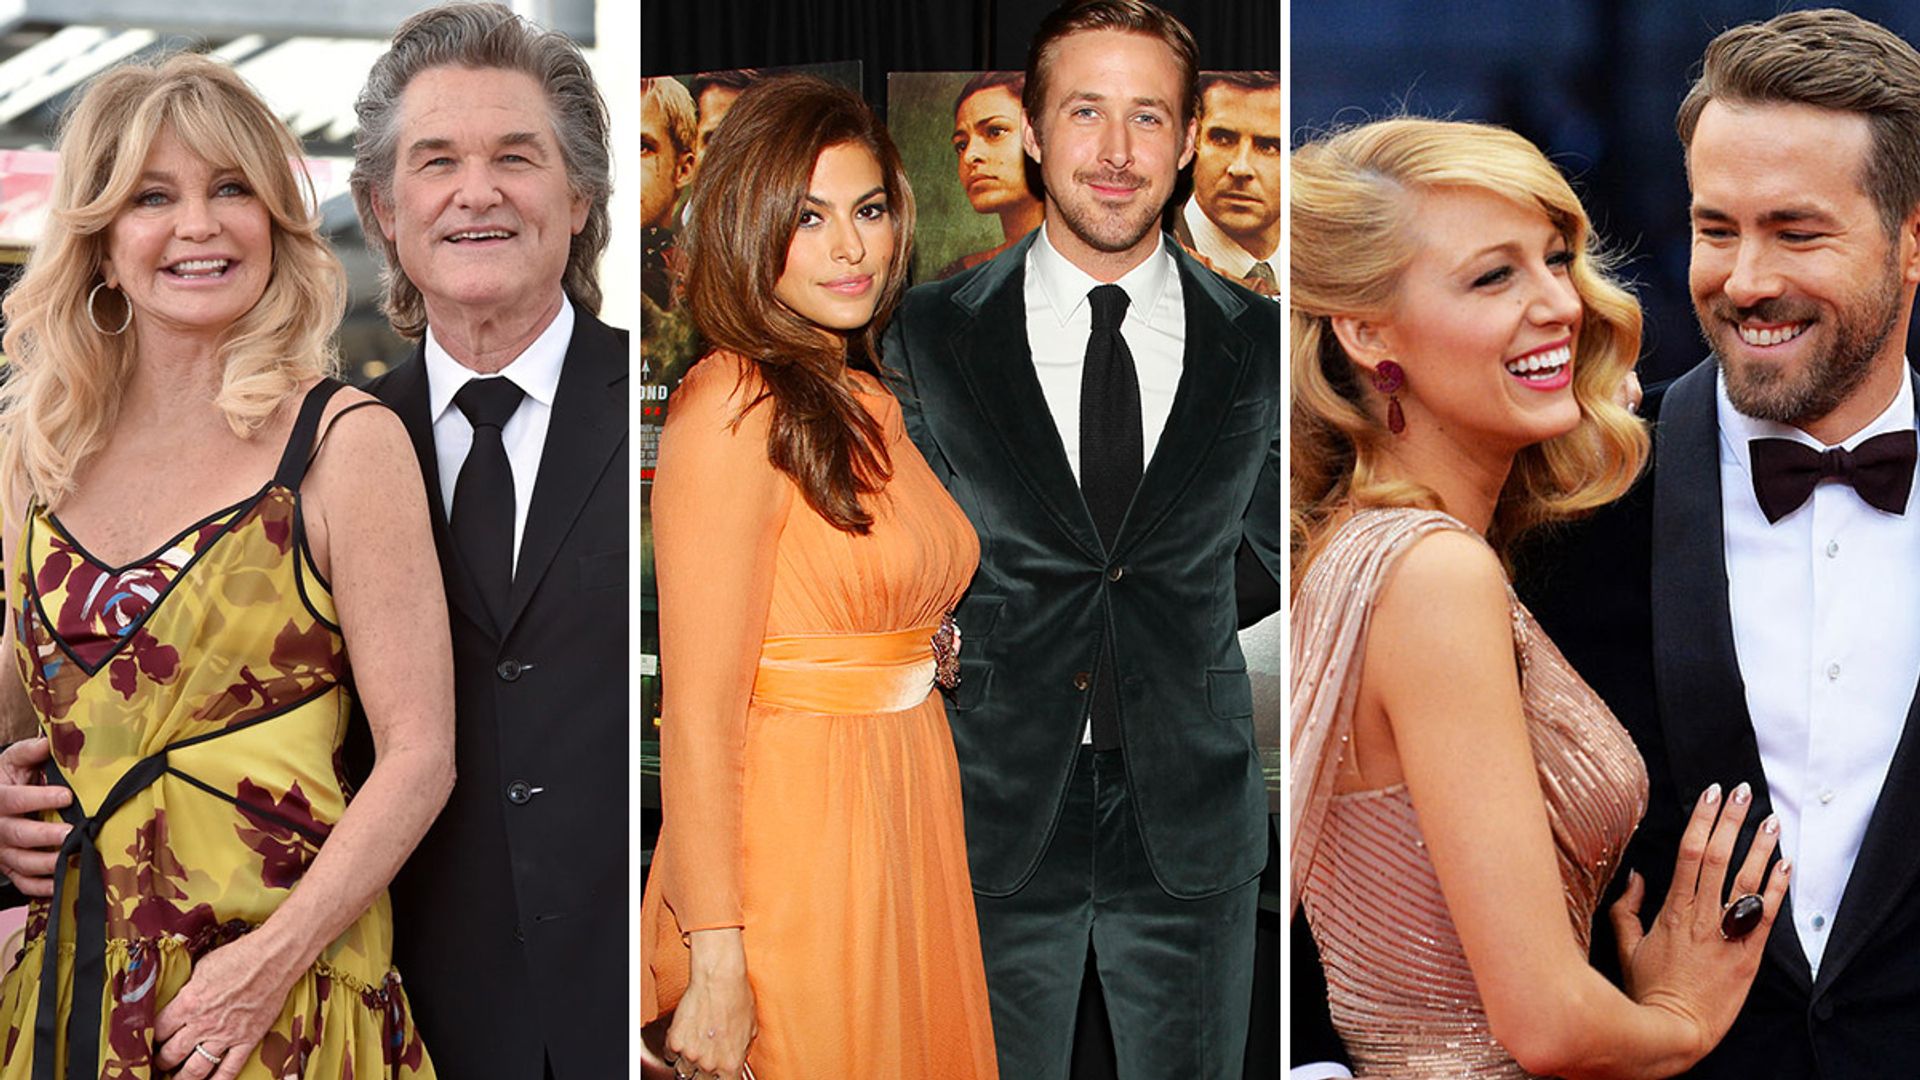 Goldie Hawn & Kurt Russell, Eva Mendes & Ryan Gosling, and Blake Lively & Ryan Reynolds